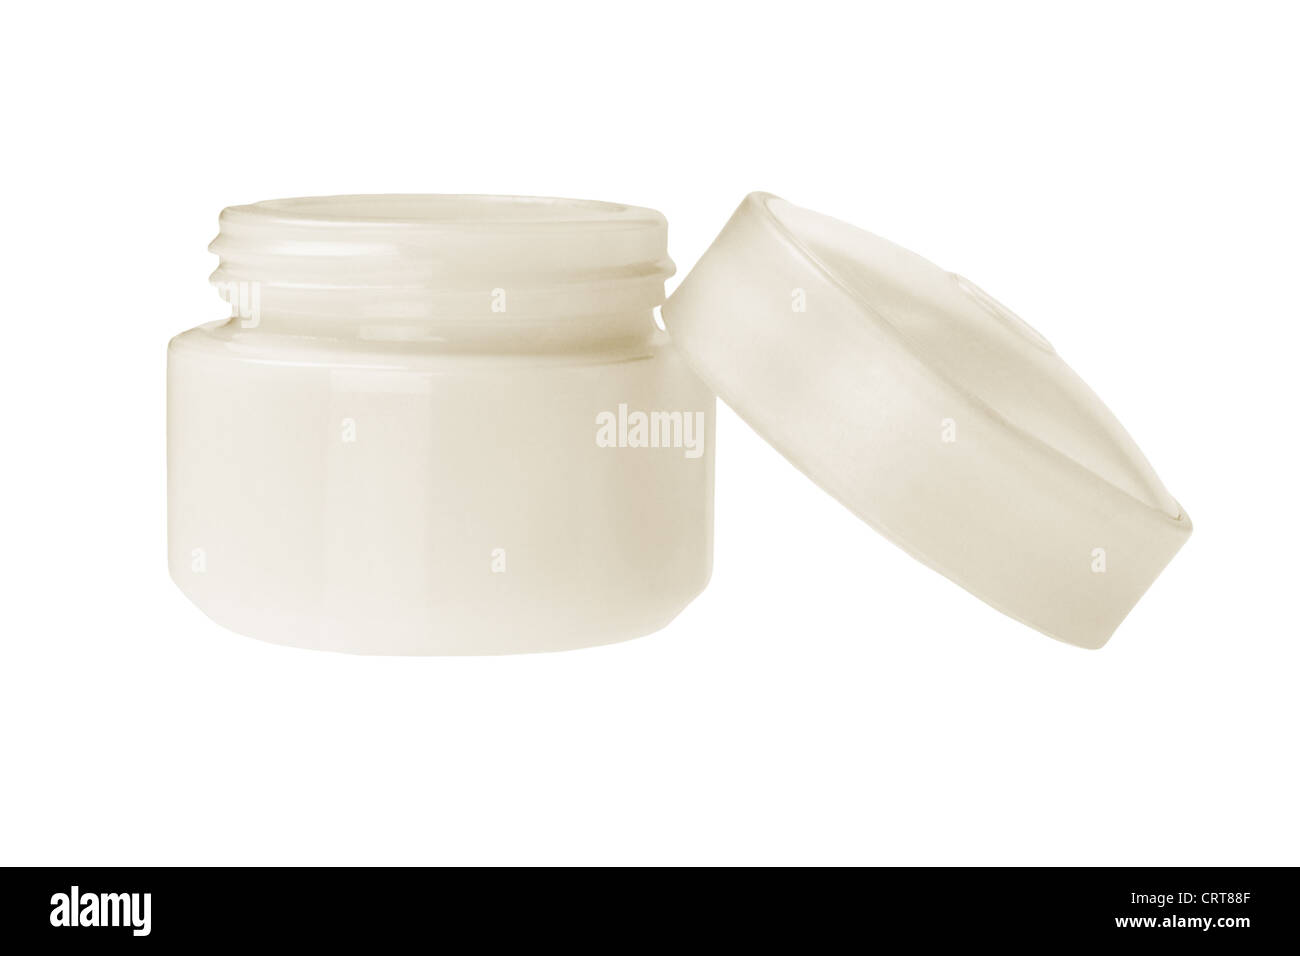 Open Blank Cosmetic Cream Bottle on White Background Stock Photo